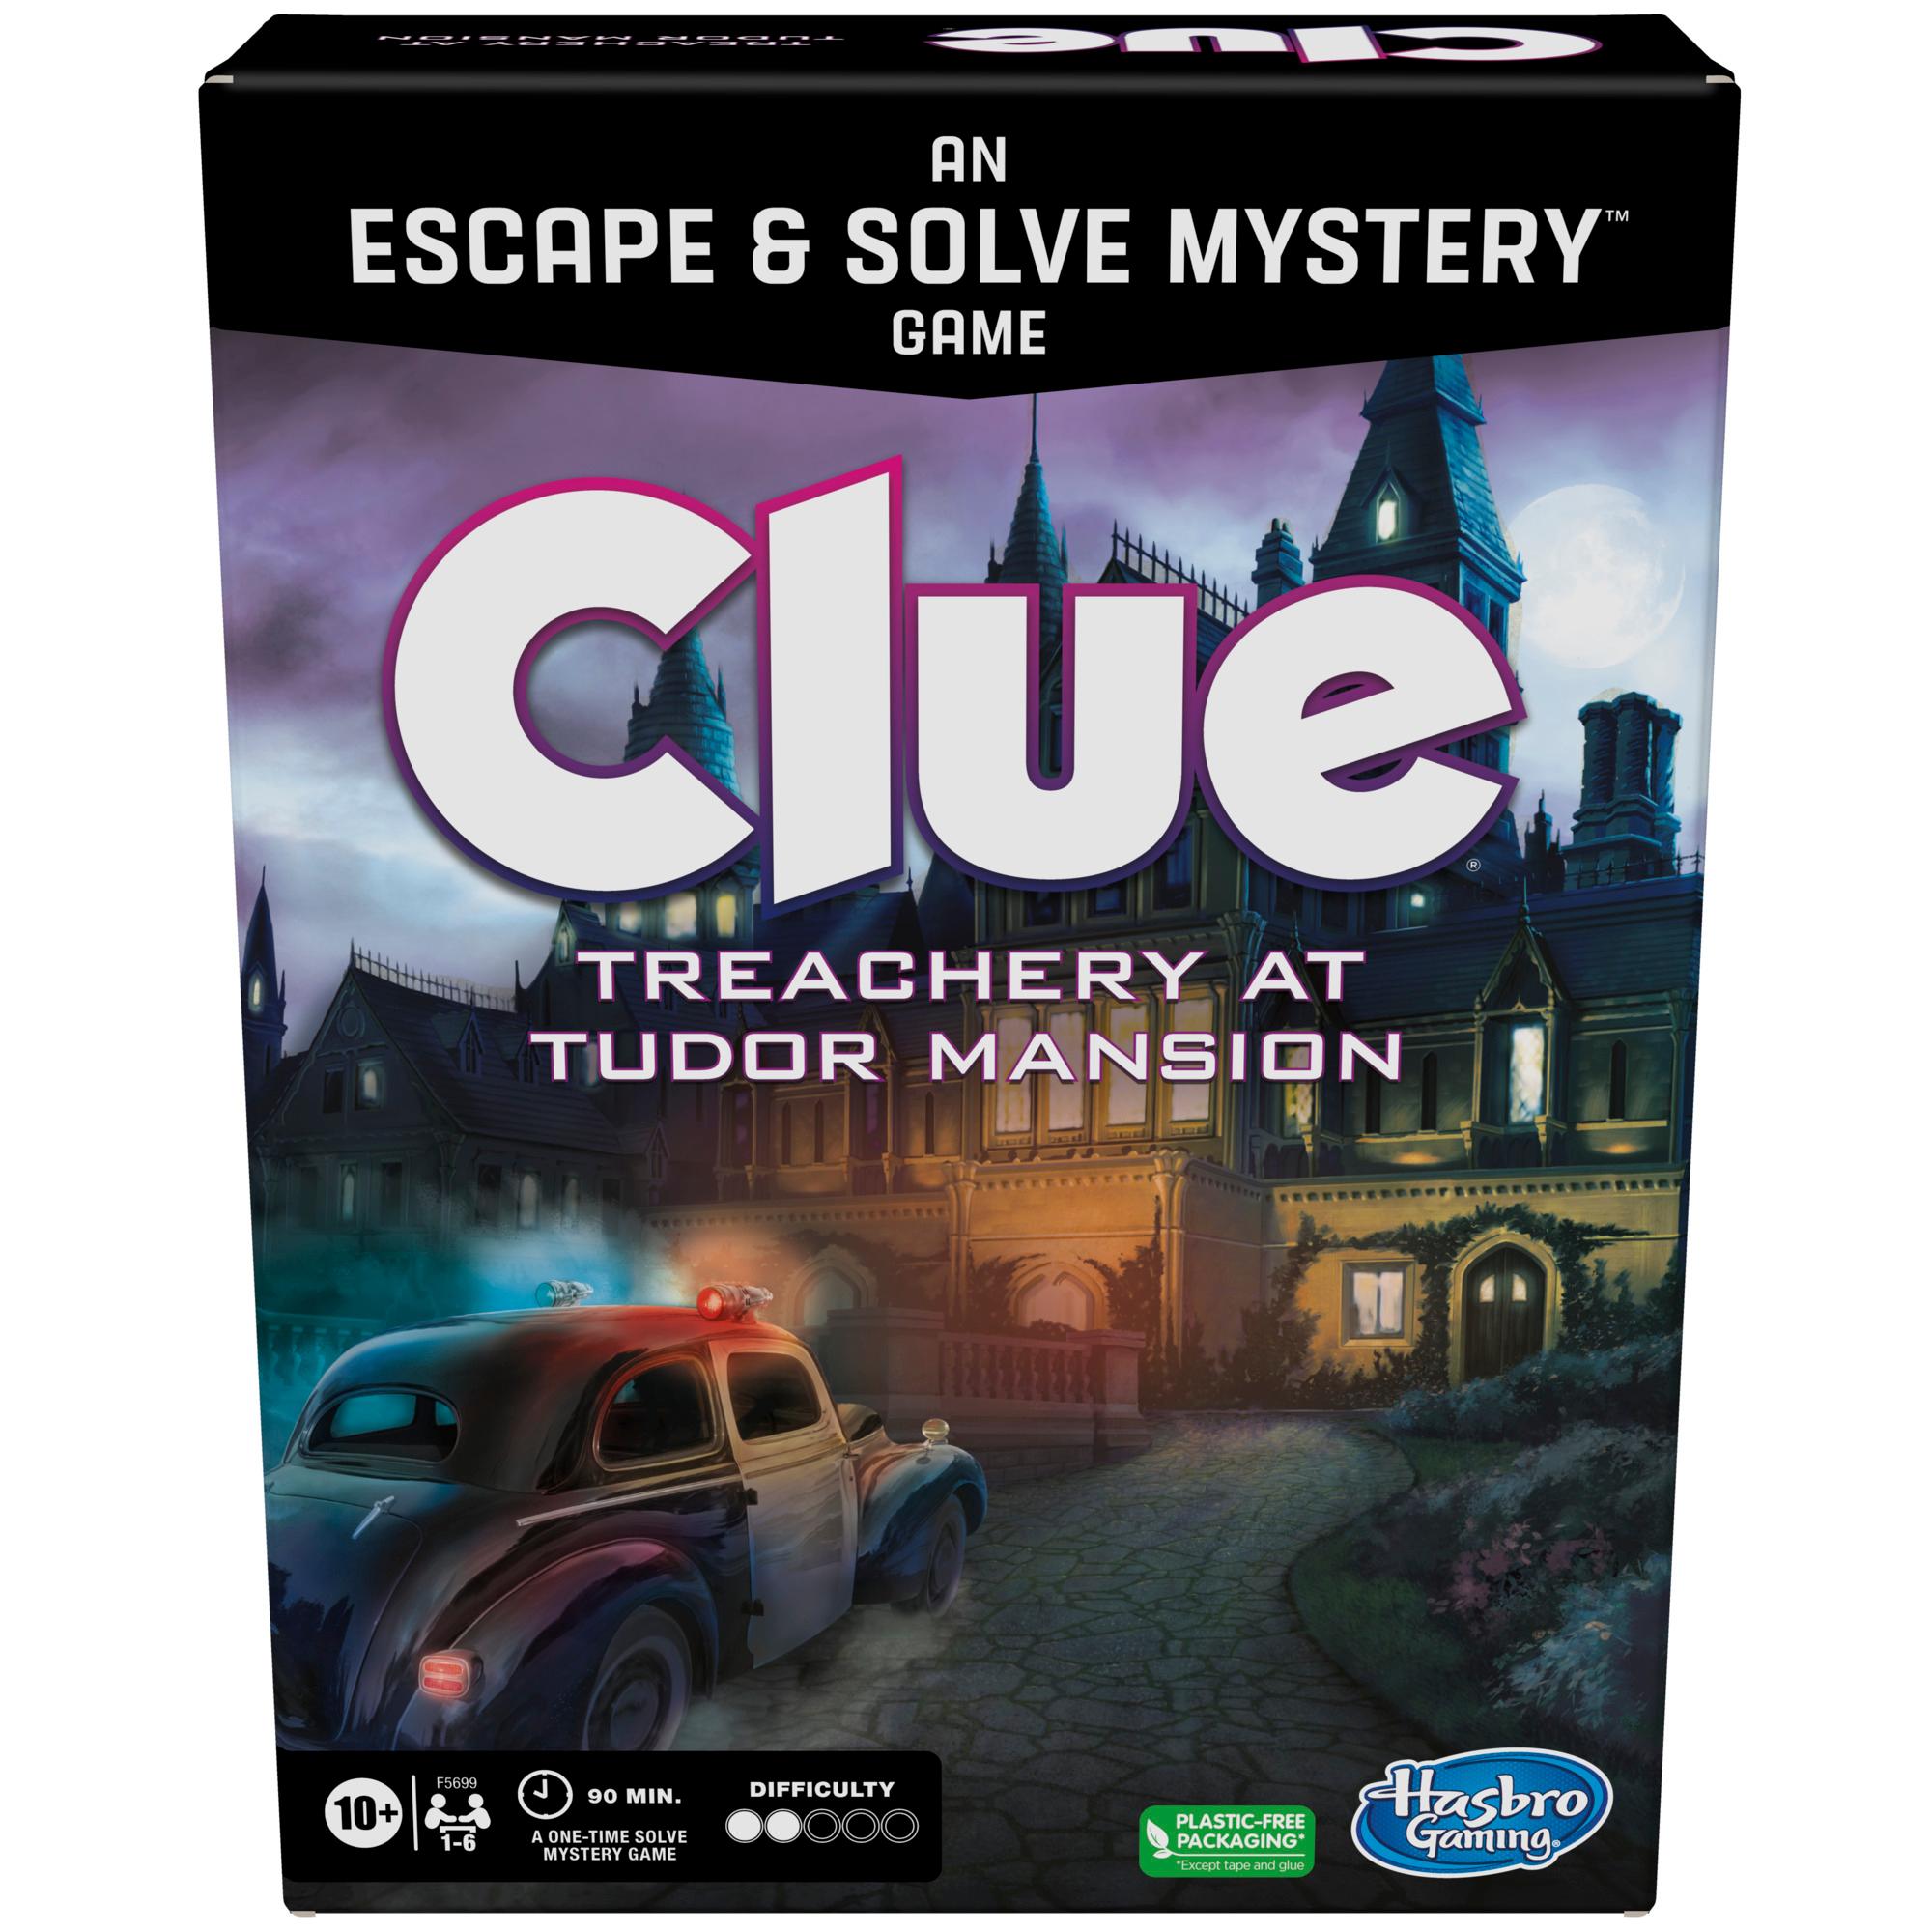 clue-treachery-at-tudor-mansion-an-escape-solve-mystery-game